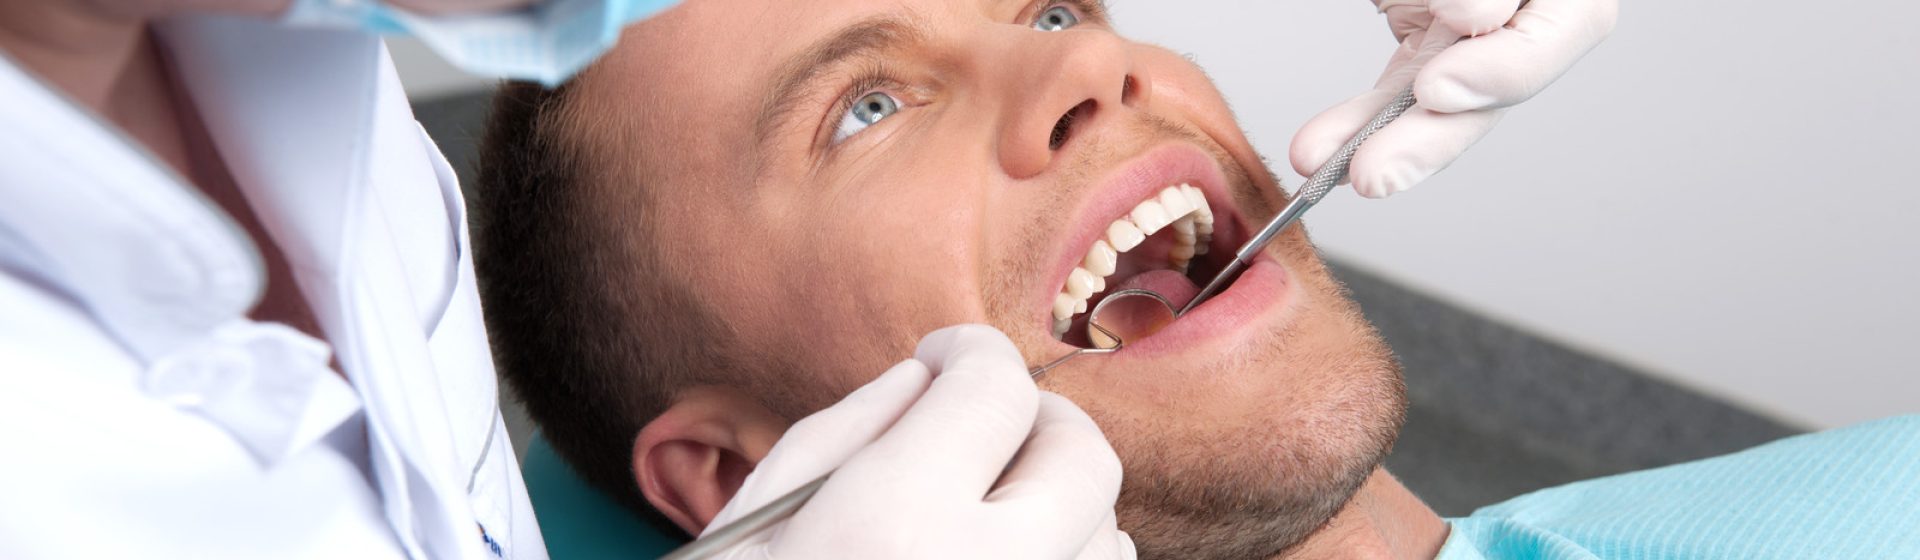 Service de dentiste à Montauban – Jean-Luc Bueno